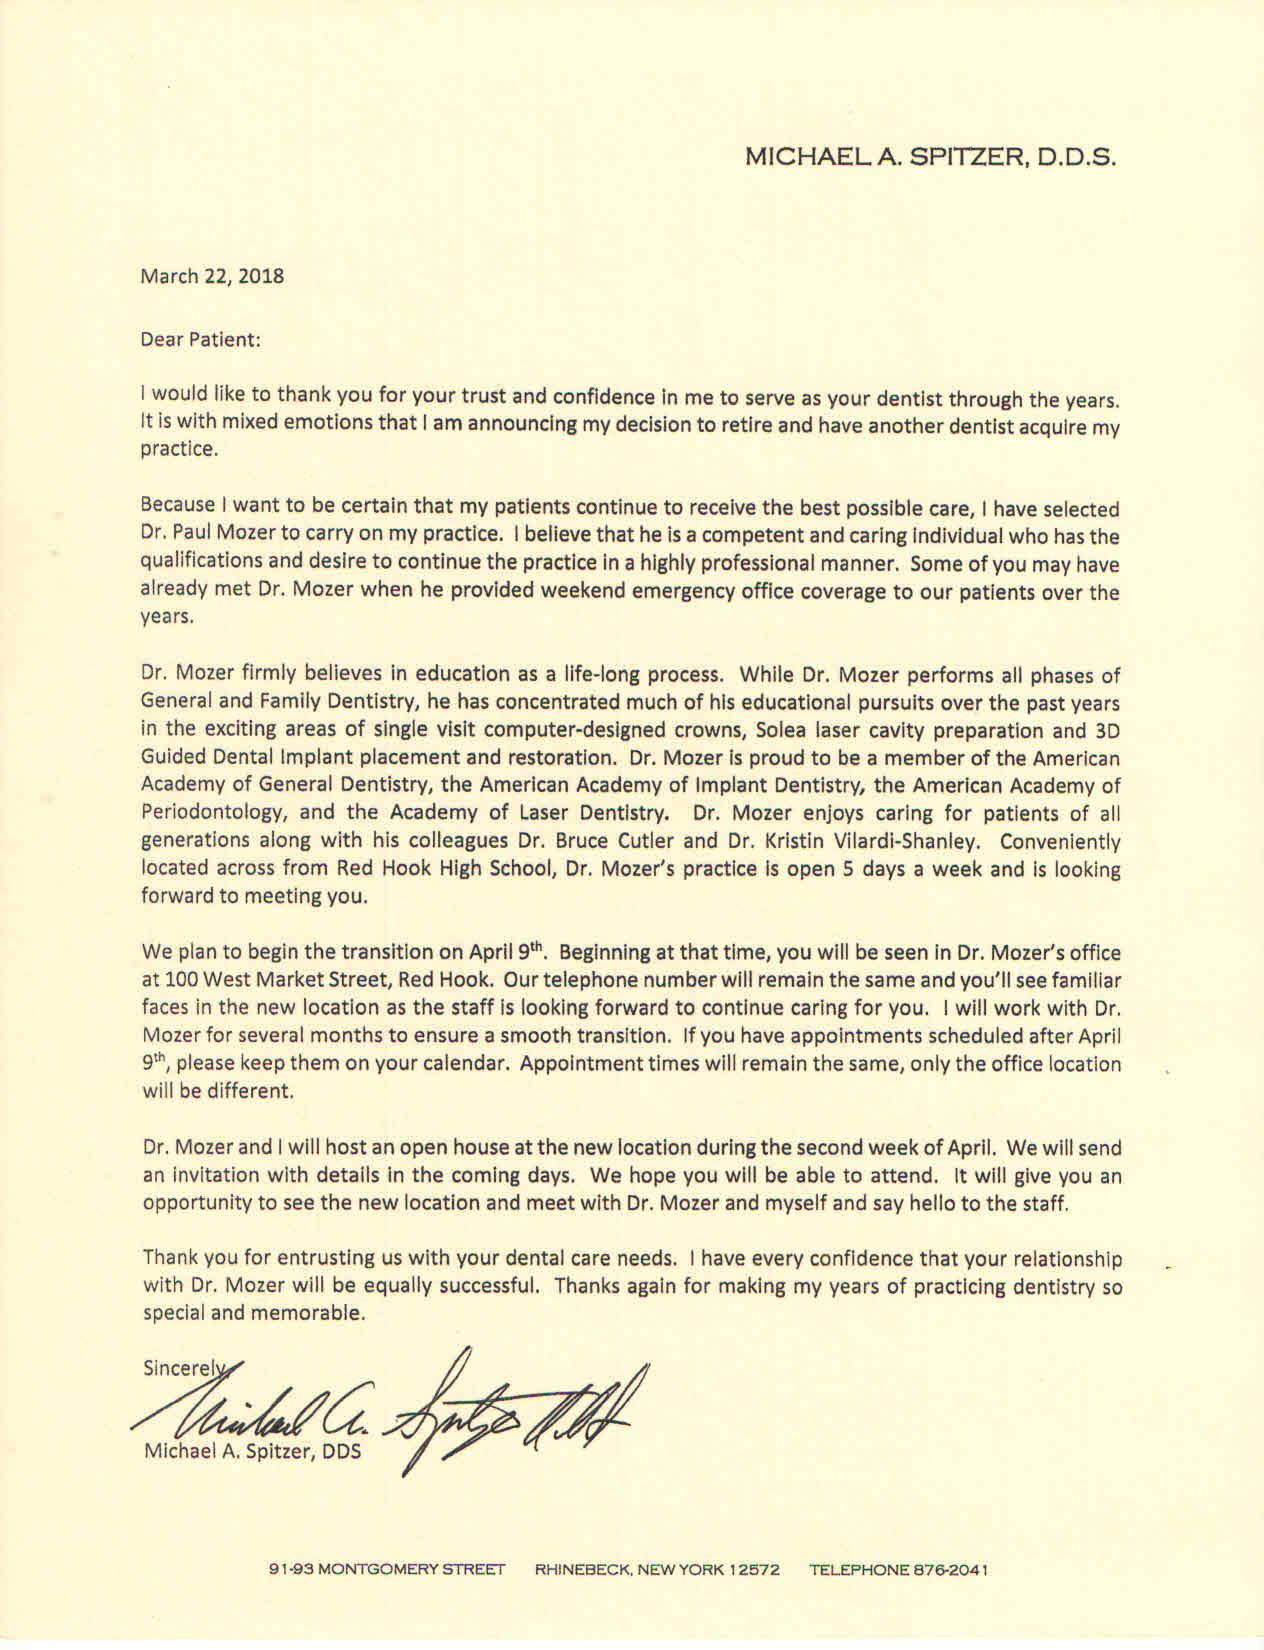 Dr. Spitzer Retirement Letter